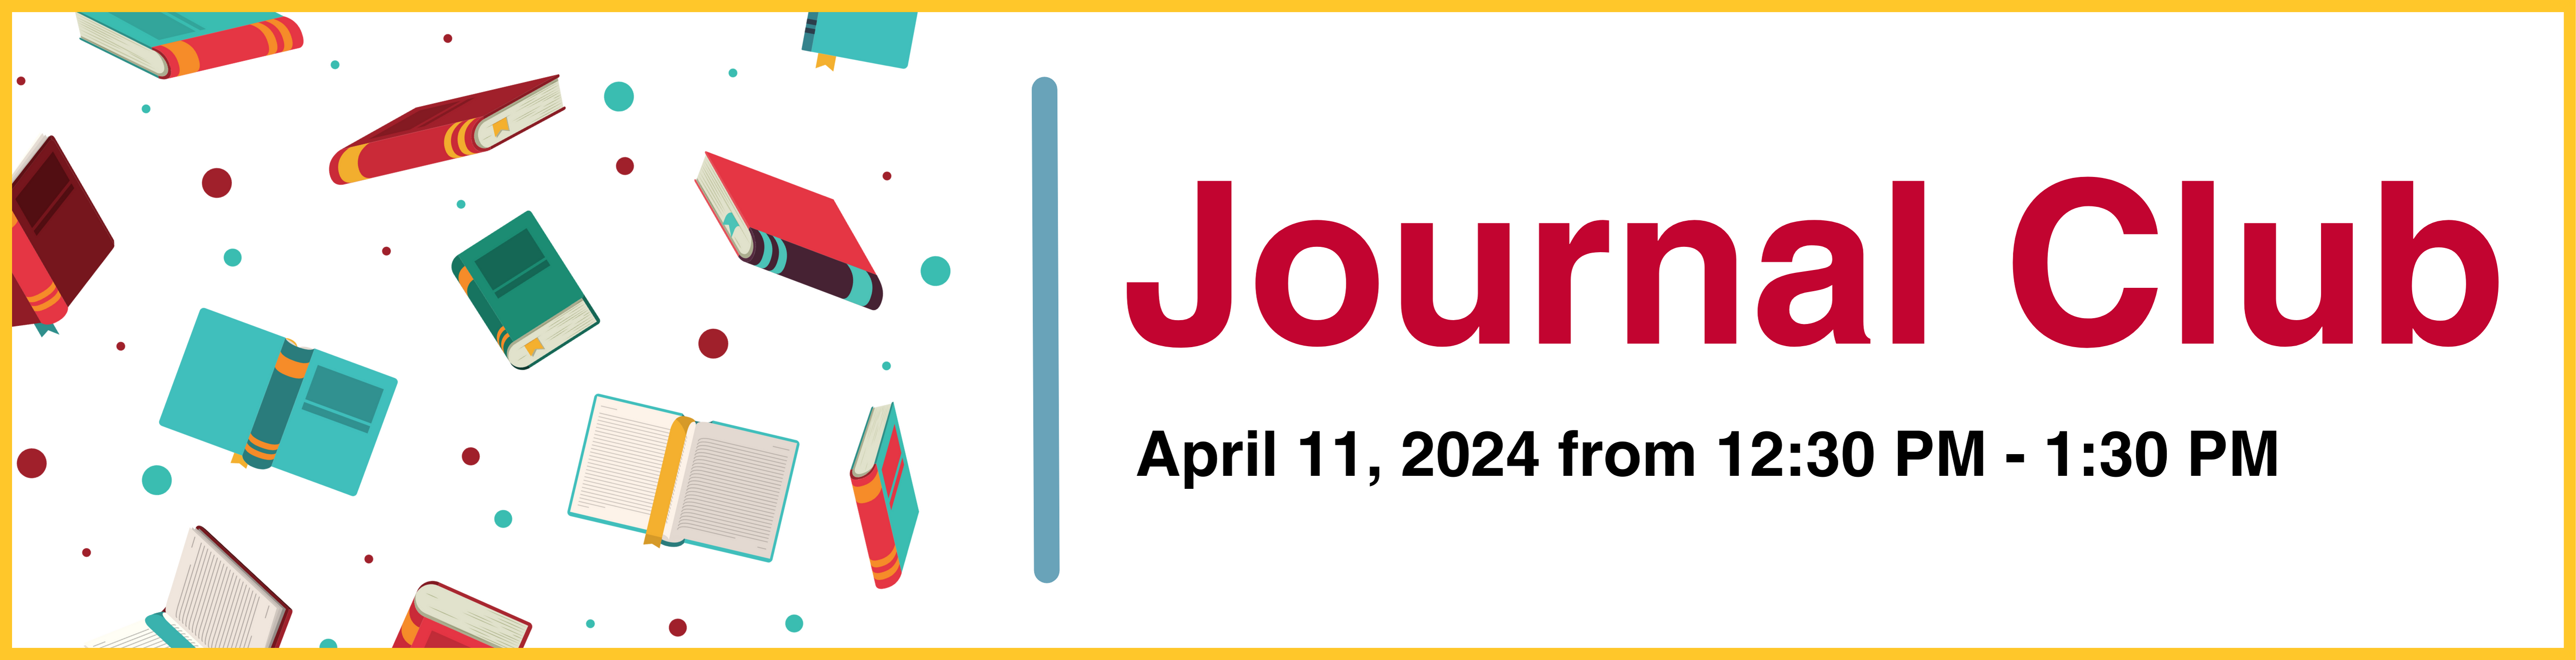 Journal Club April 2024